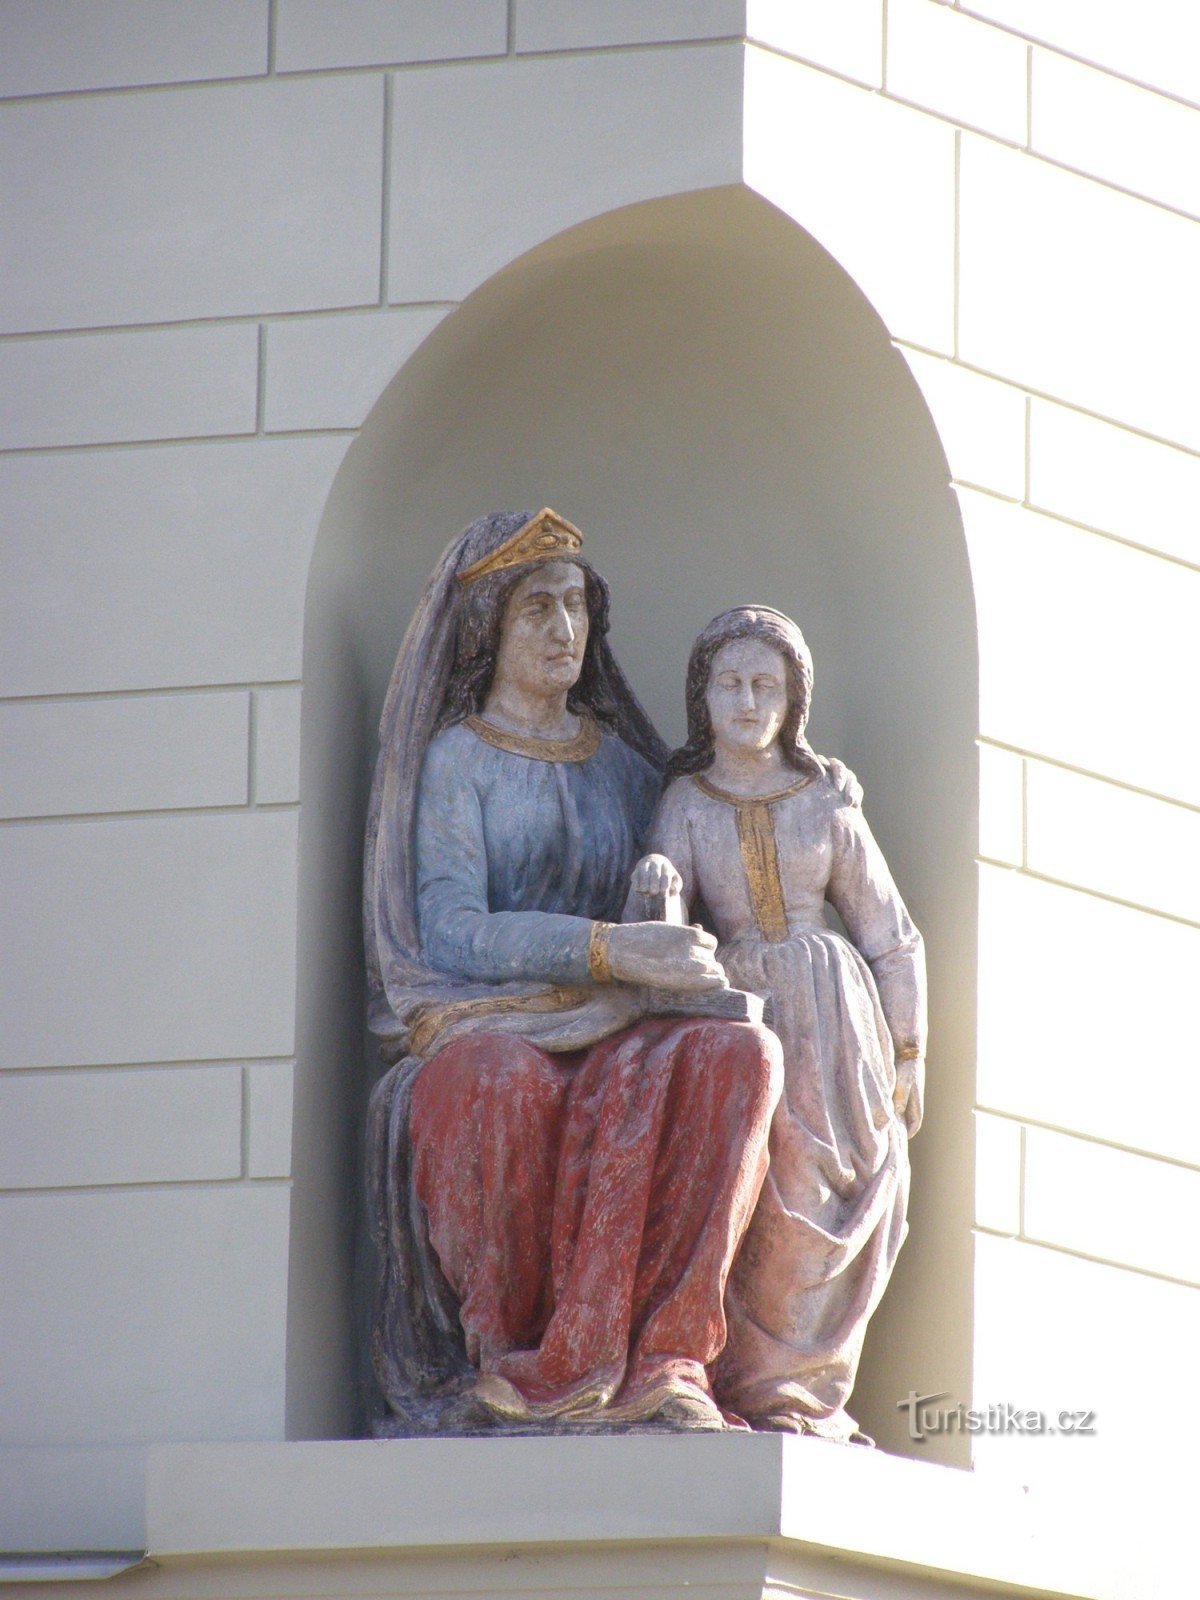 Týnec nad Labem - burgerhuis nr. 74 met het standbeeld van St. Anna en de Maagd Maria